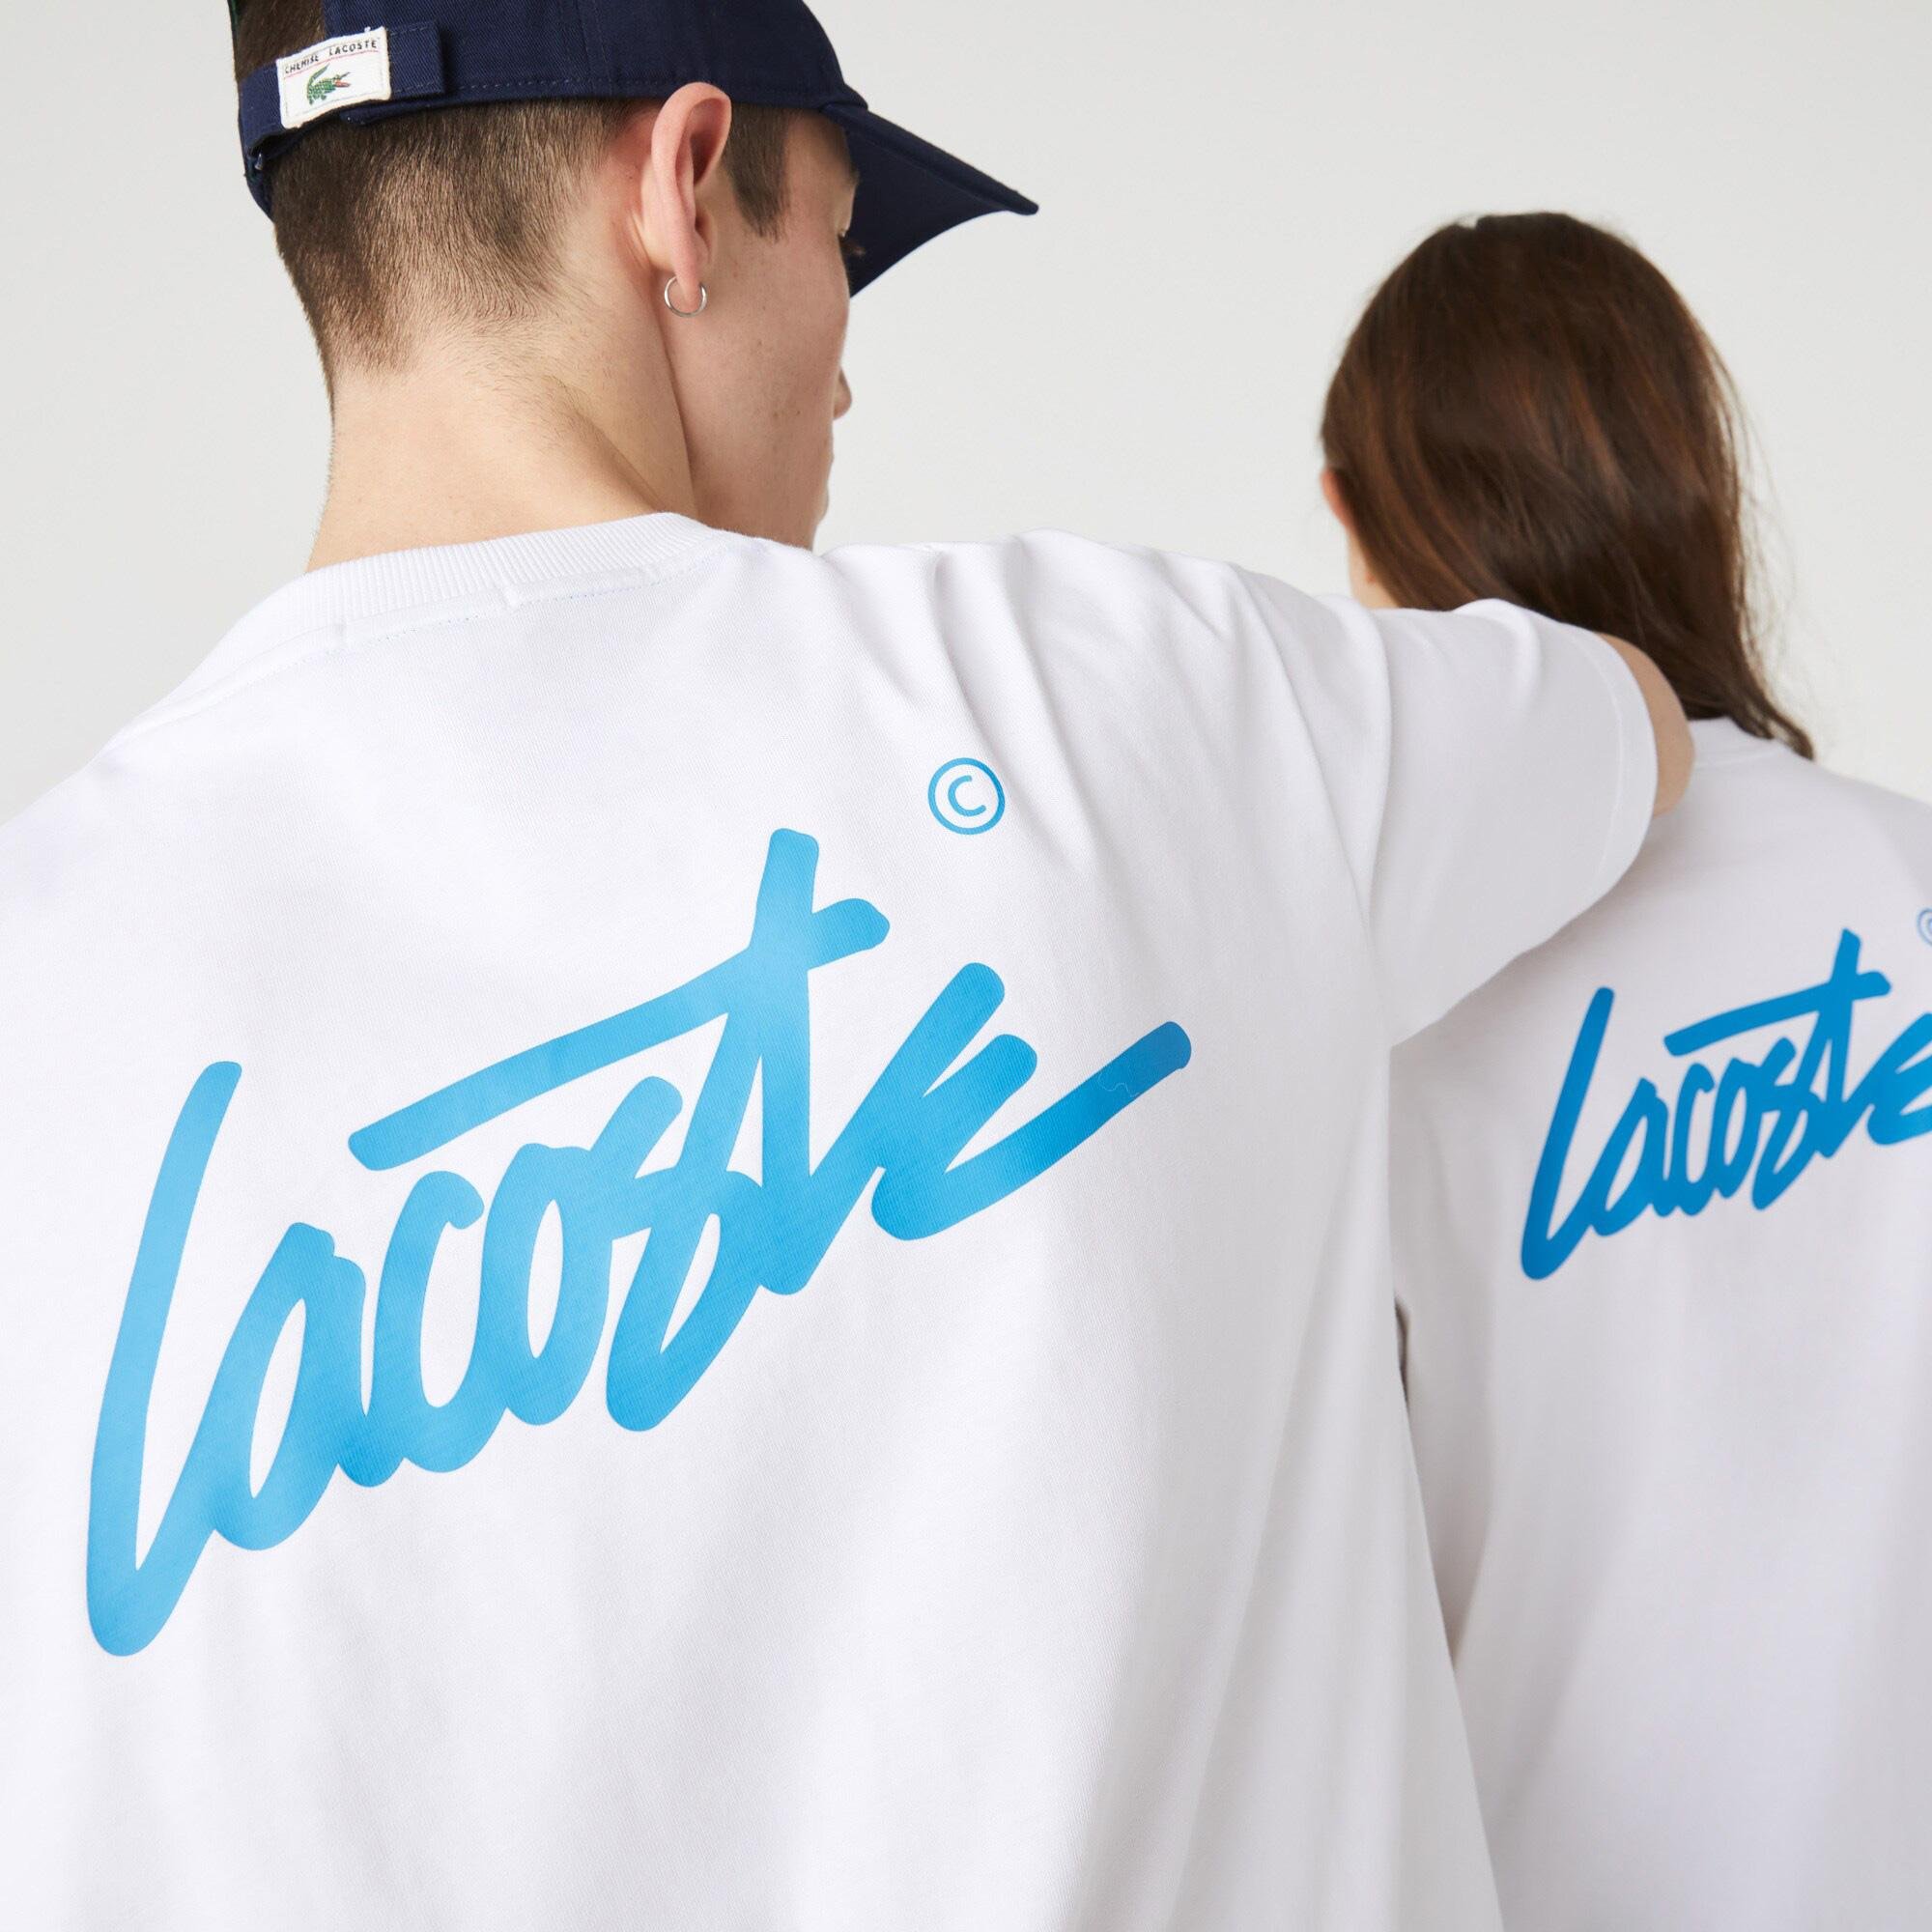 Lacoste Unisex L!VE bavlnené tričko voľného strihu s potlačou